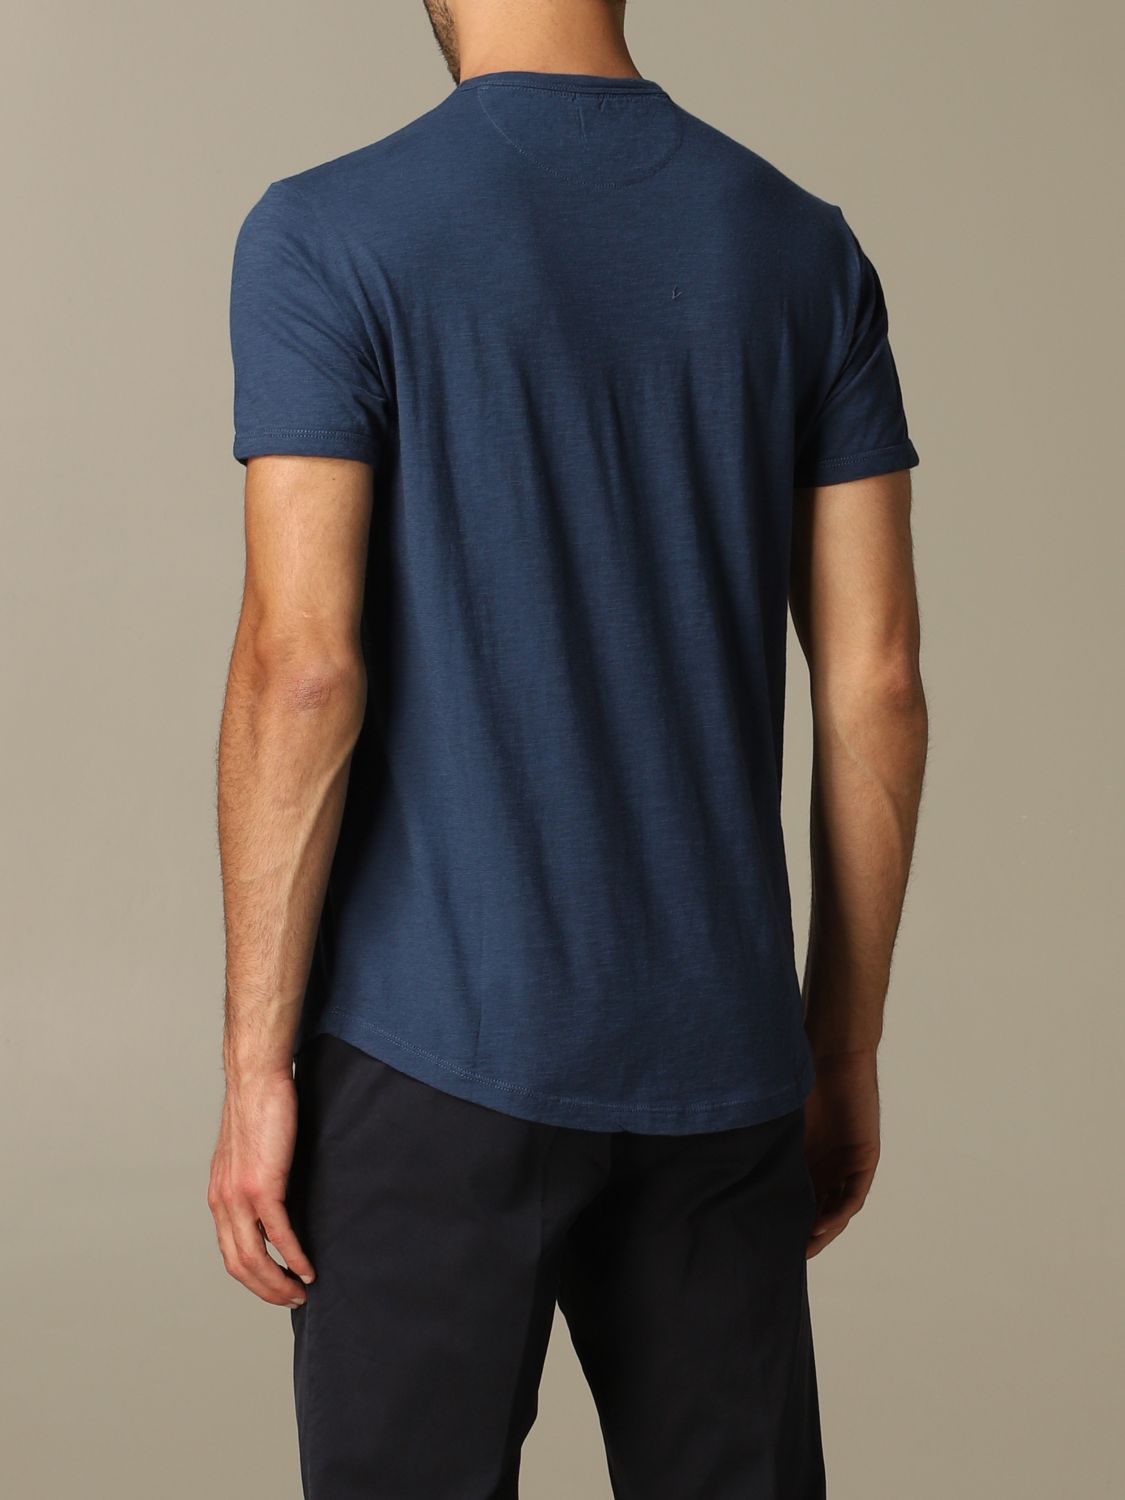 Sun 68 Outlet: t-shirt for men - Blue | Sun 68 t-shirt T30108 online on ...